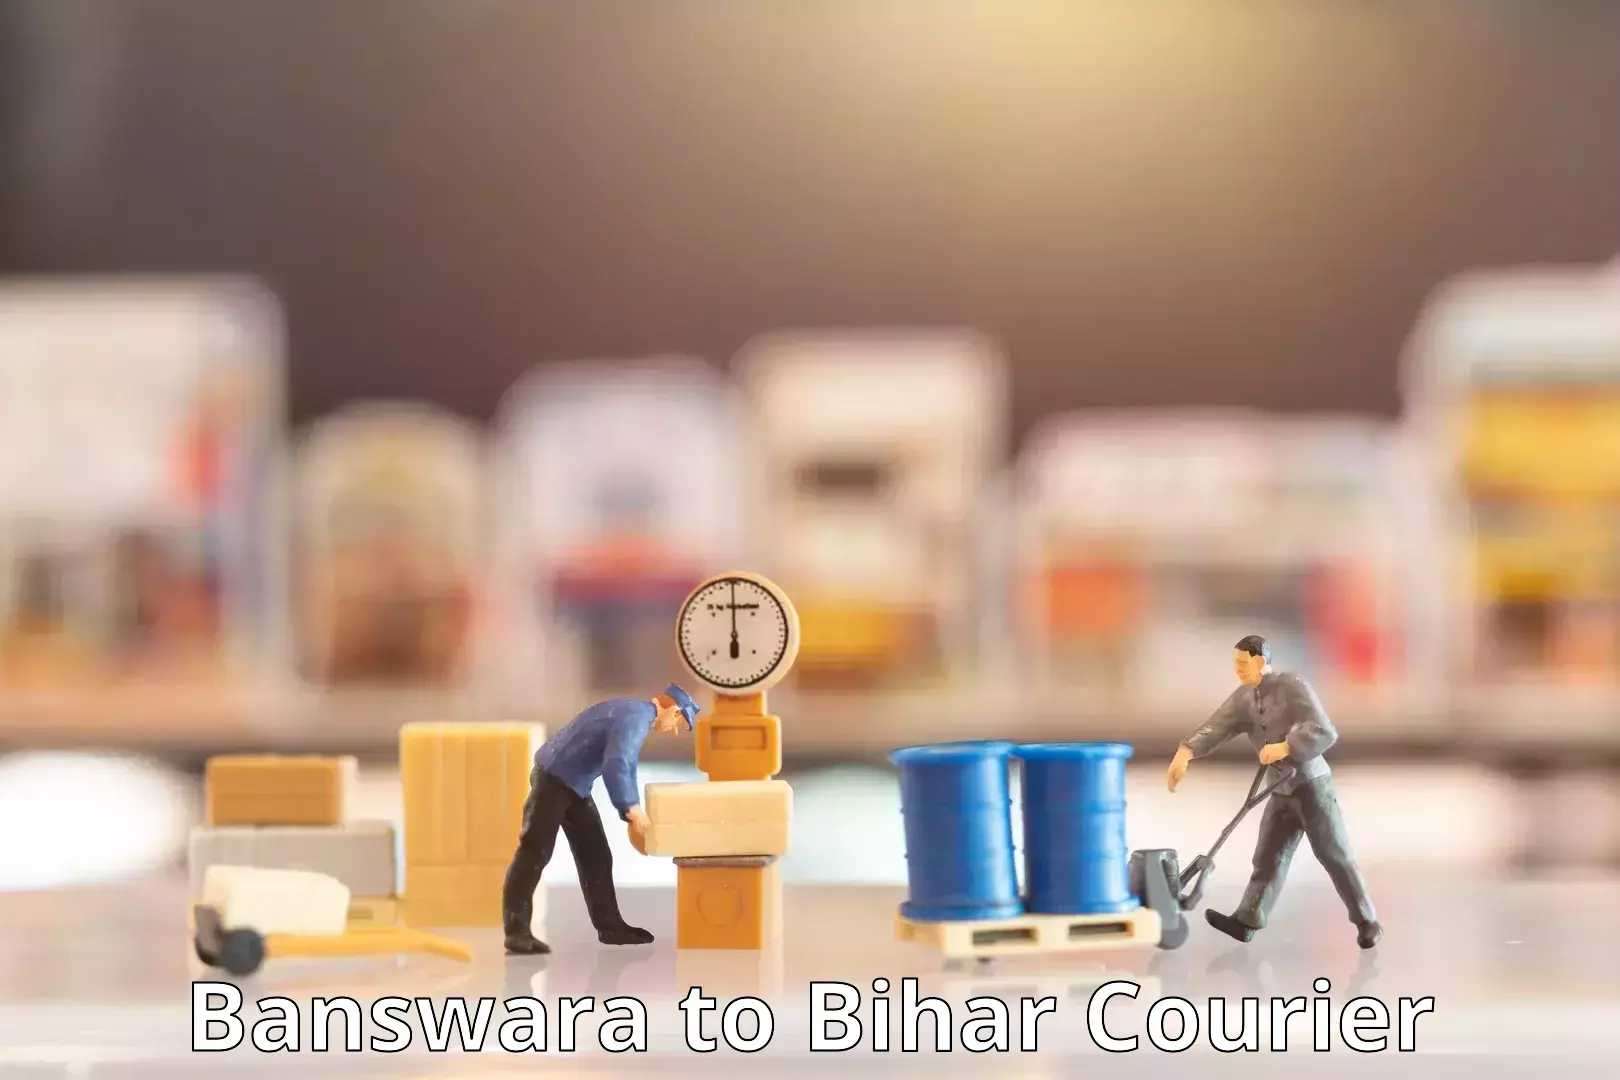 User-friendly courier app Banswara to Mahaddipur